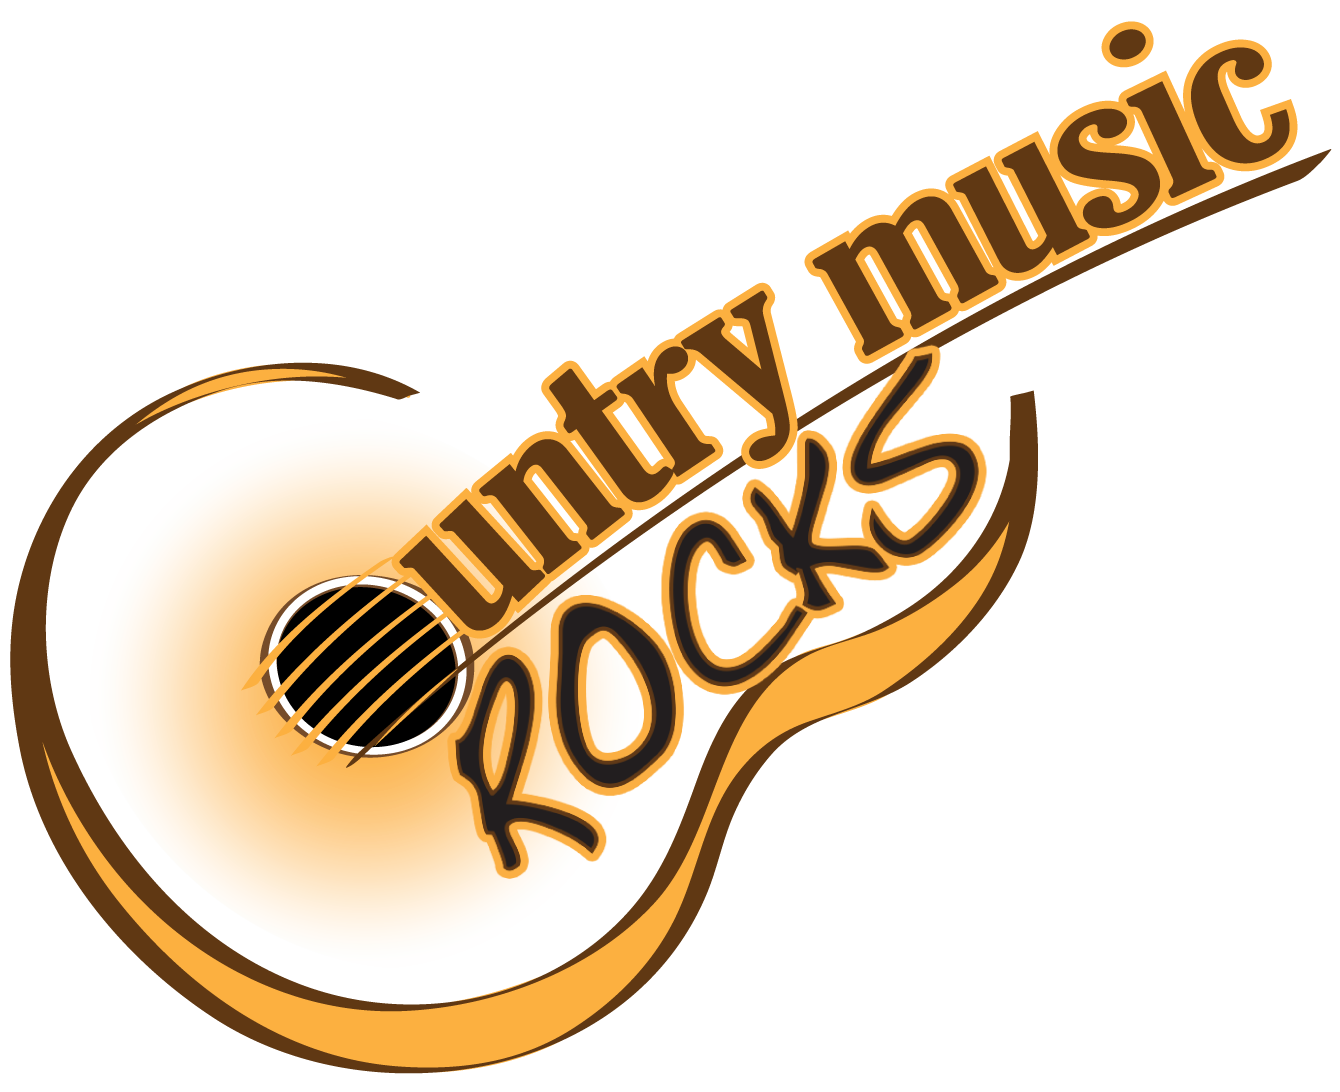 Country Music Rocks!